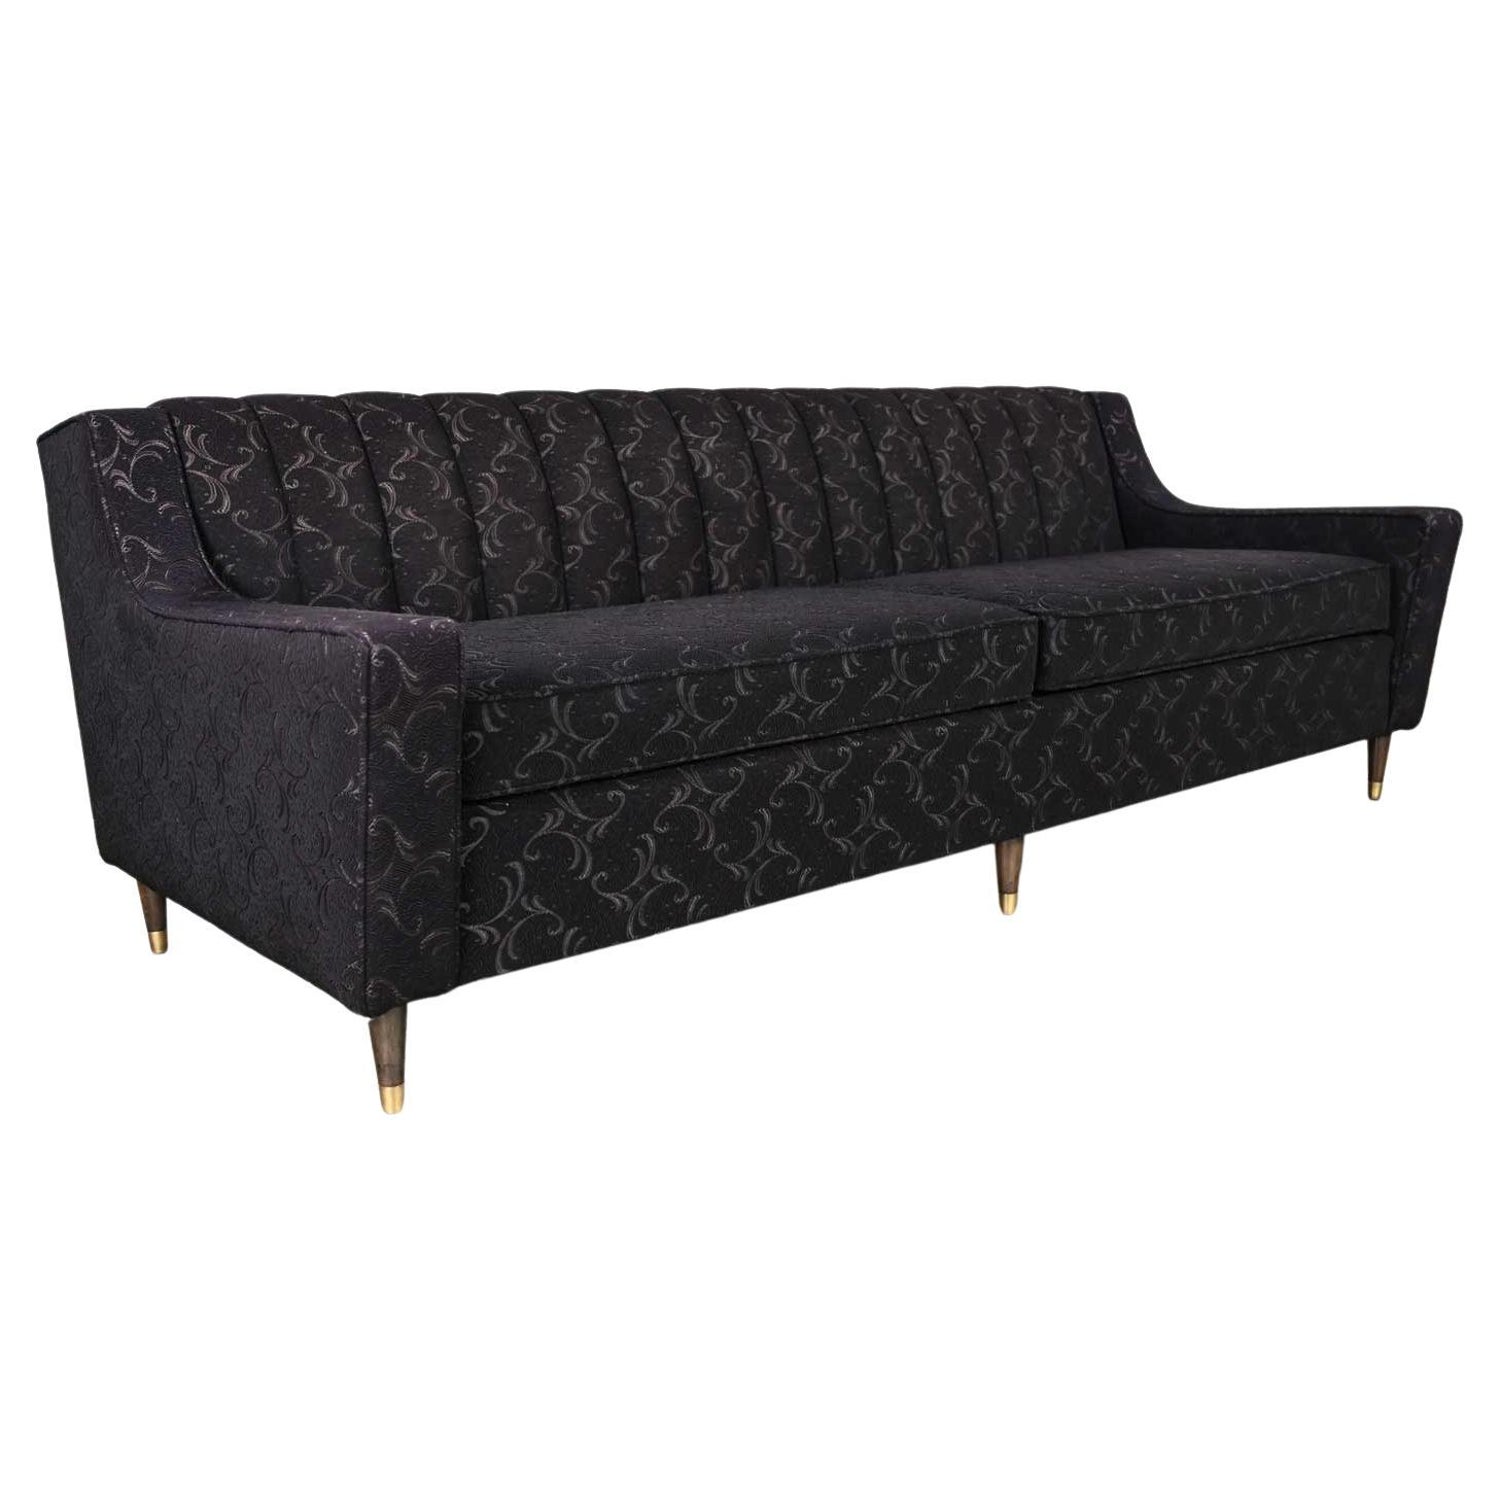 Lawson Style Sofa - 3 For Sale on 1stDibs | lawson sofa styles, lawson sofas  for sale, the lawson-style couch